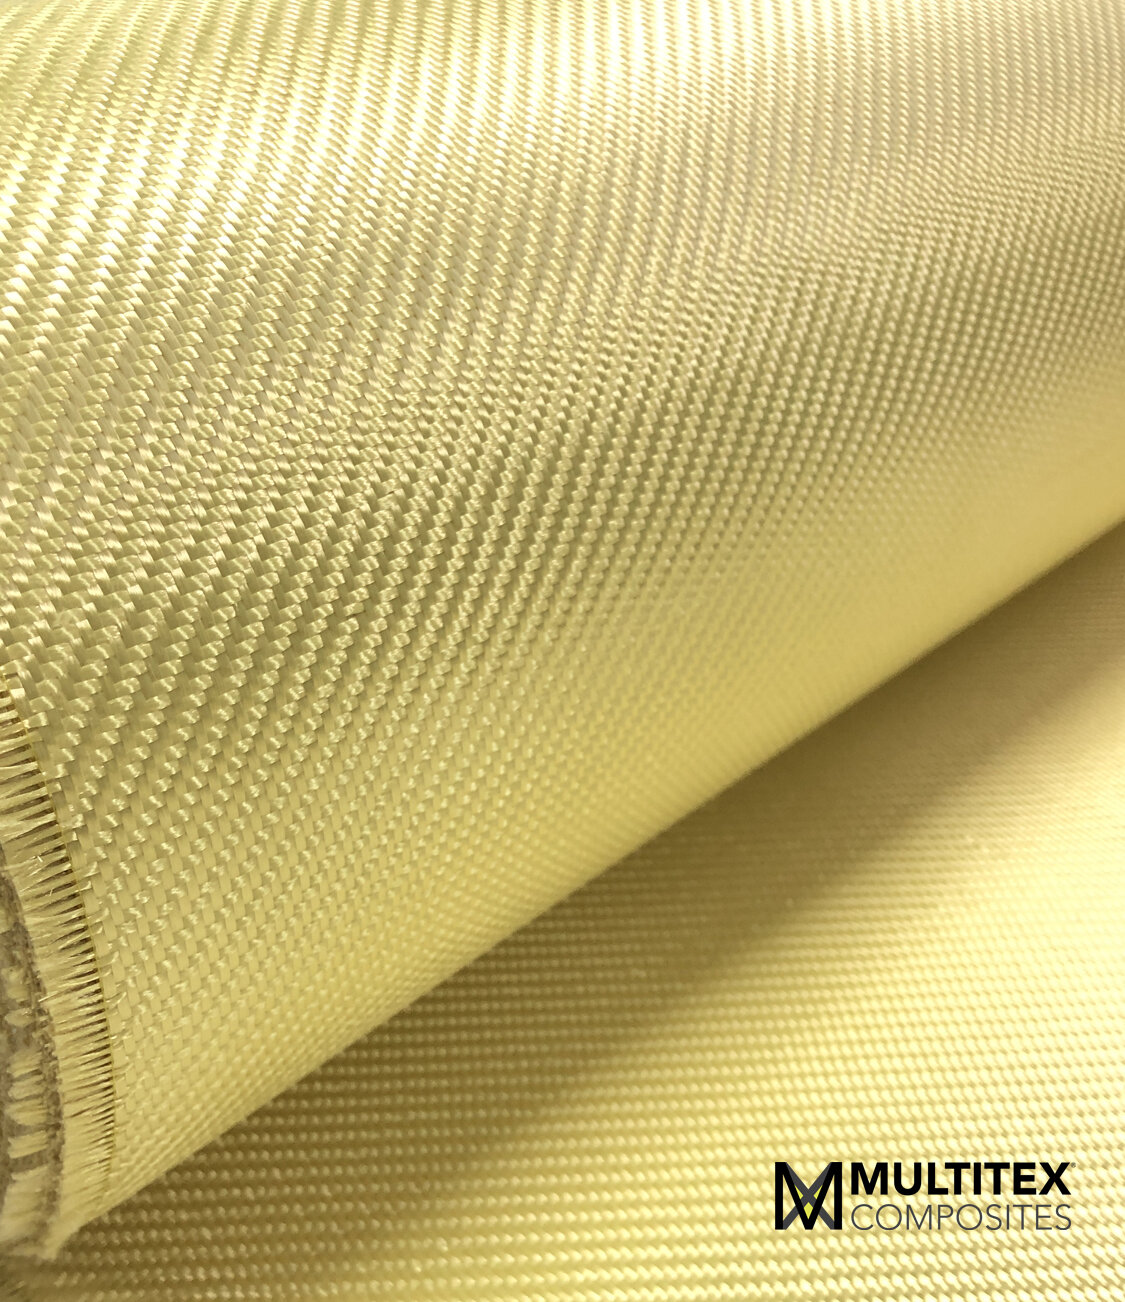 MULTITEX Composites.com - Aramid (Kevlar) 170g/m2 - 120cm width